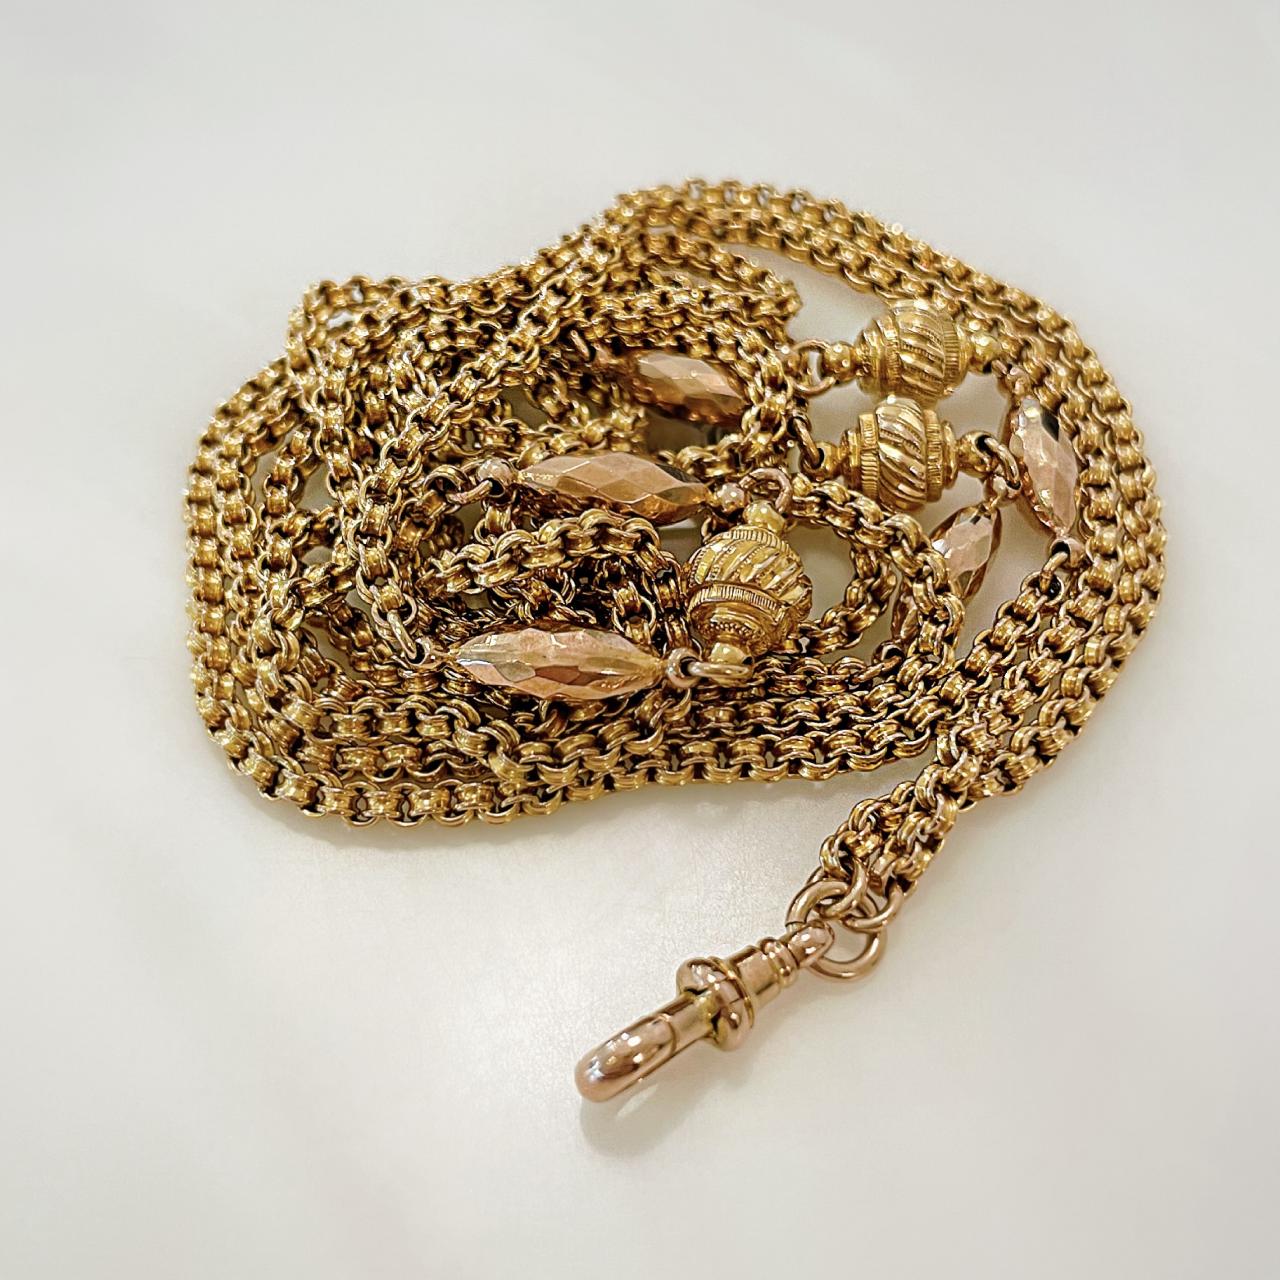 Antique English Gold Embellished Necklace